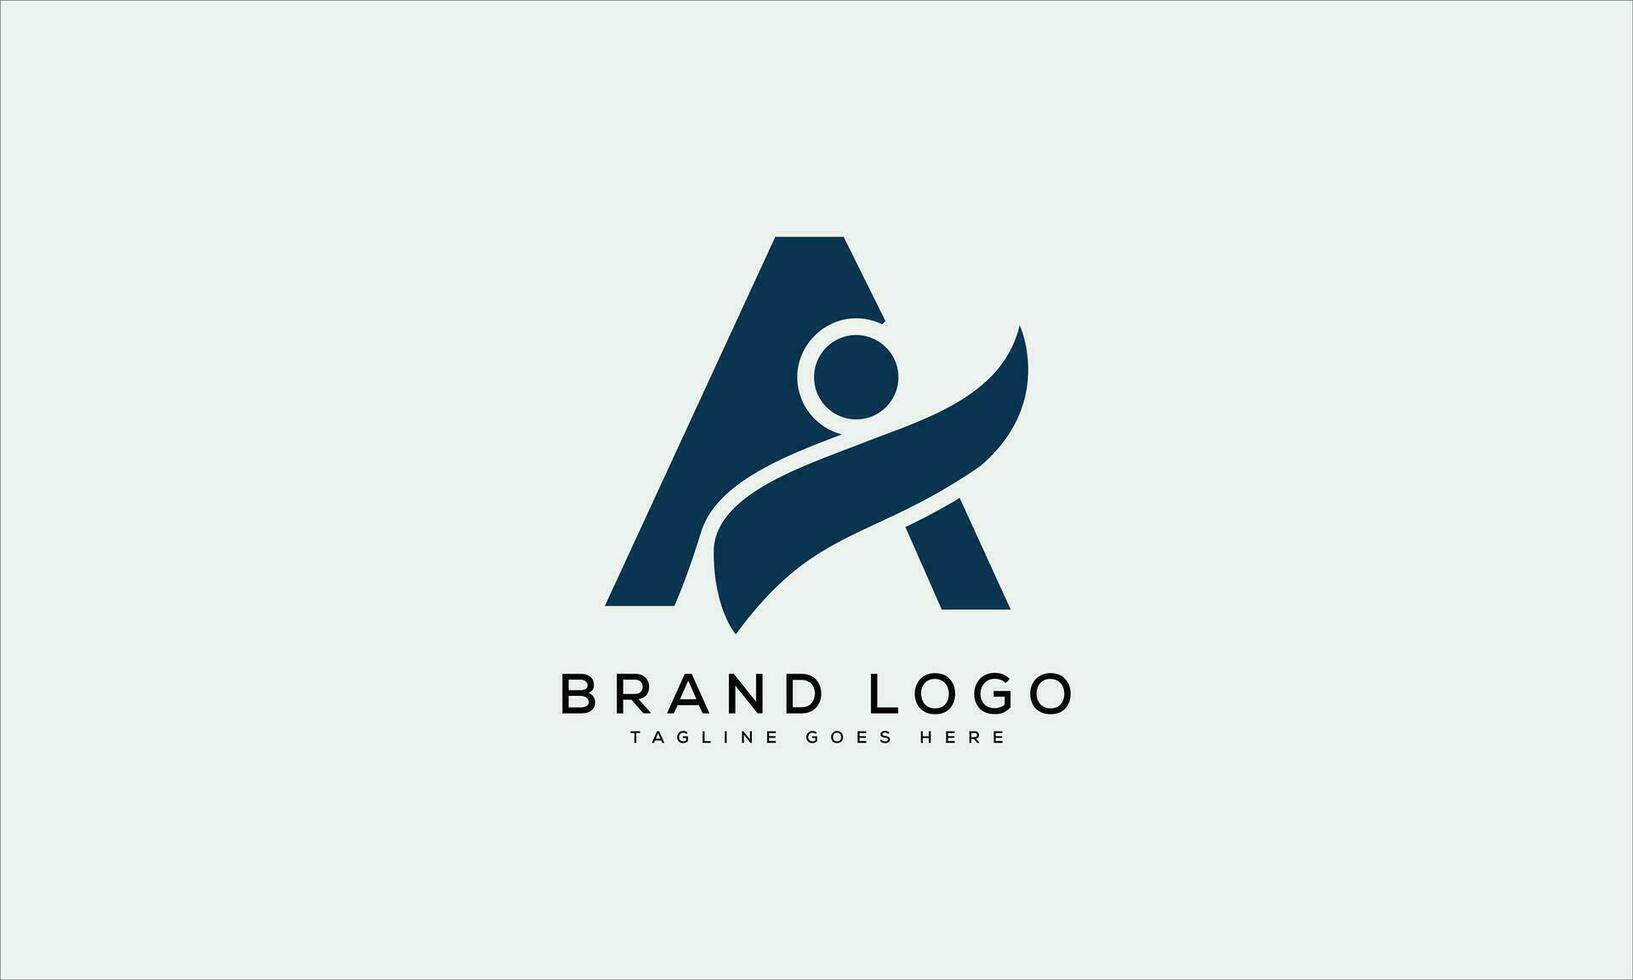 letter A logo design vector template design for brand.